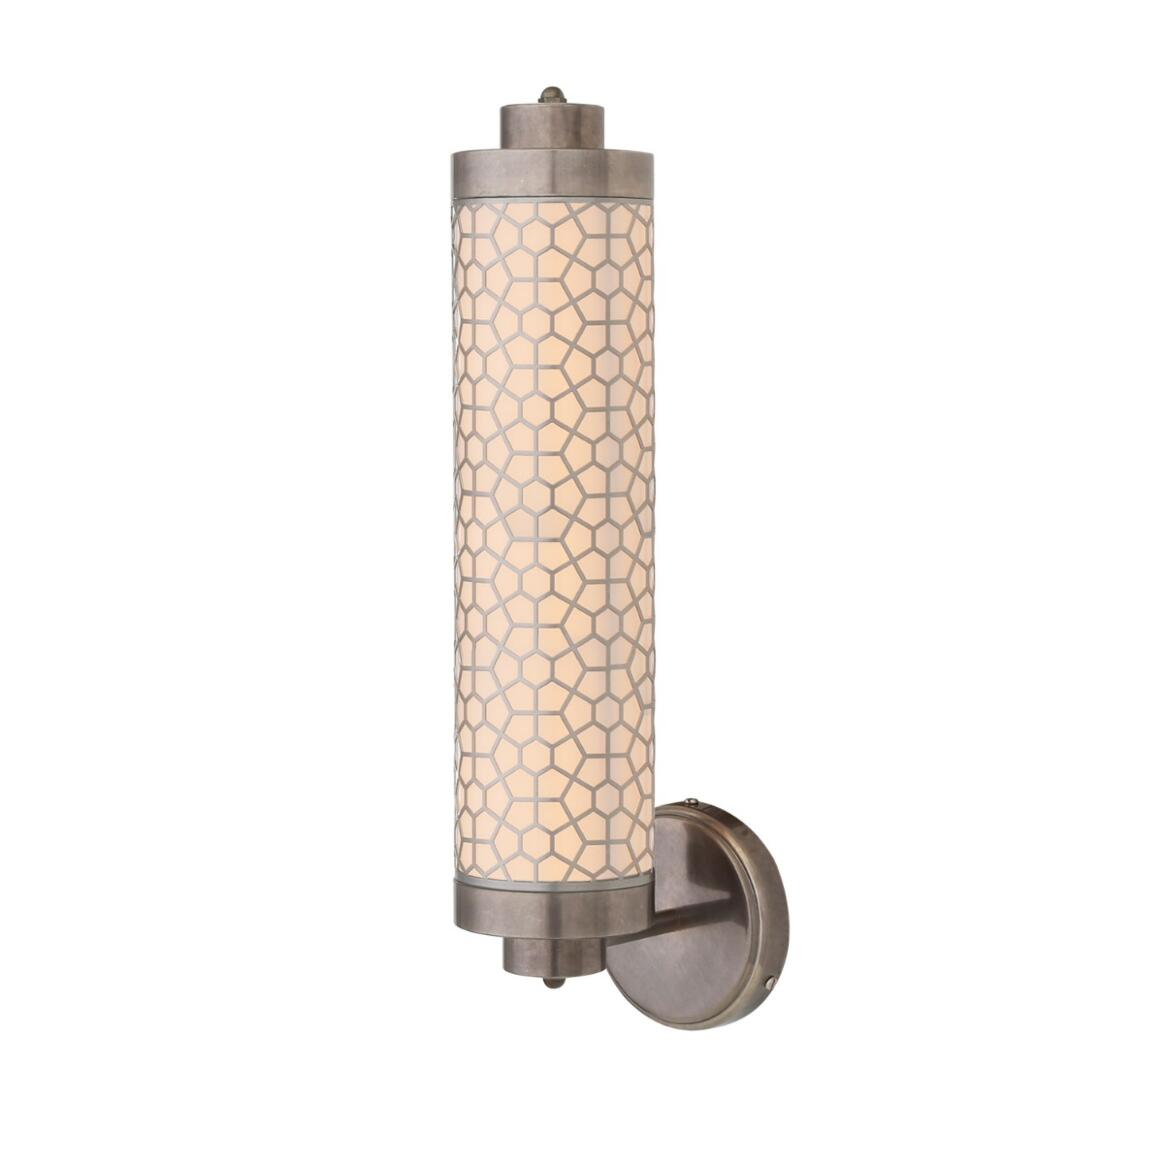 Ocala Brass Wall Light with Hexagonal Mesh main product image